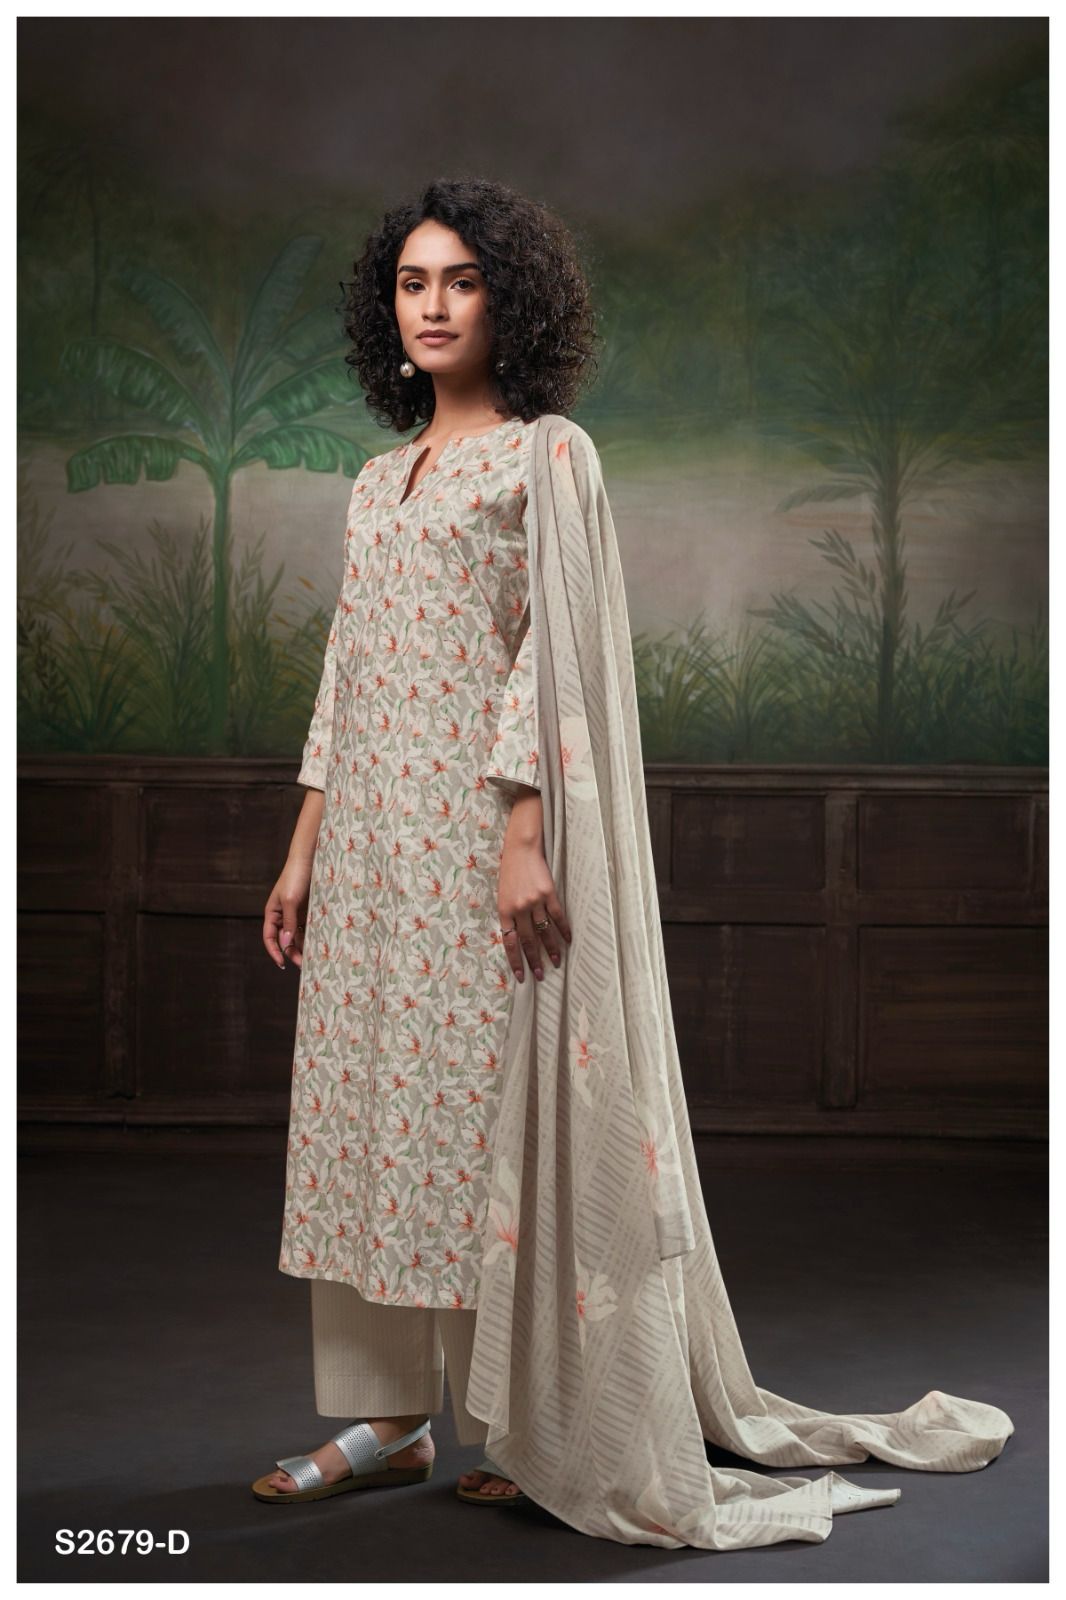 Diti 2679 Ganga Premium Cotton Plazzo Style Suits Wholesale Rate